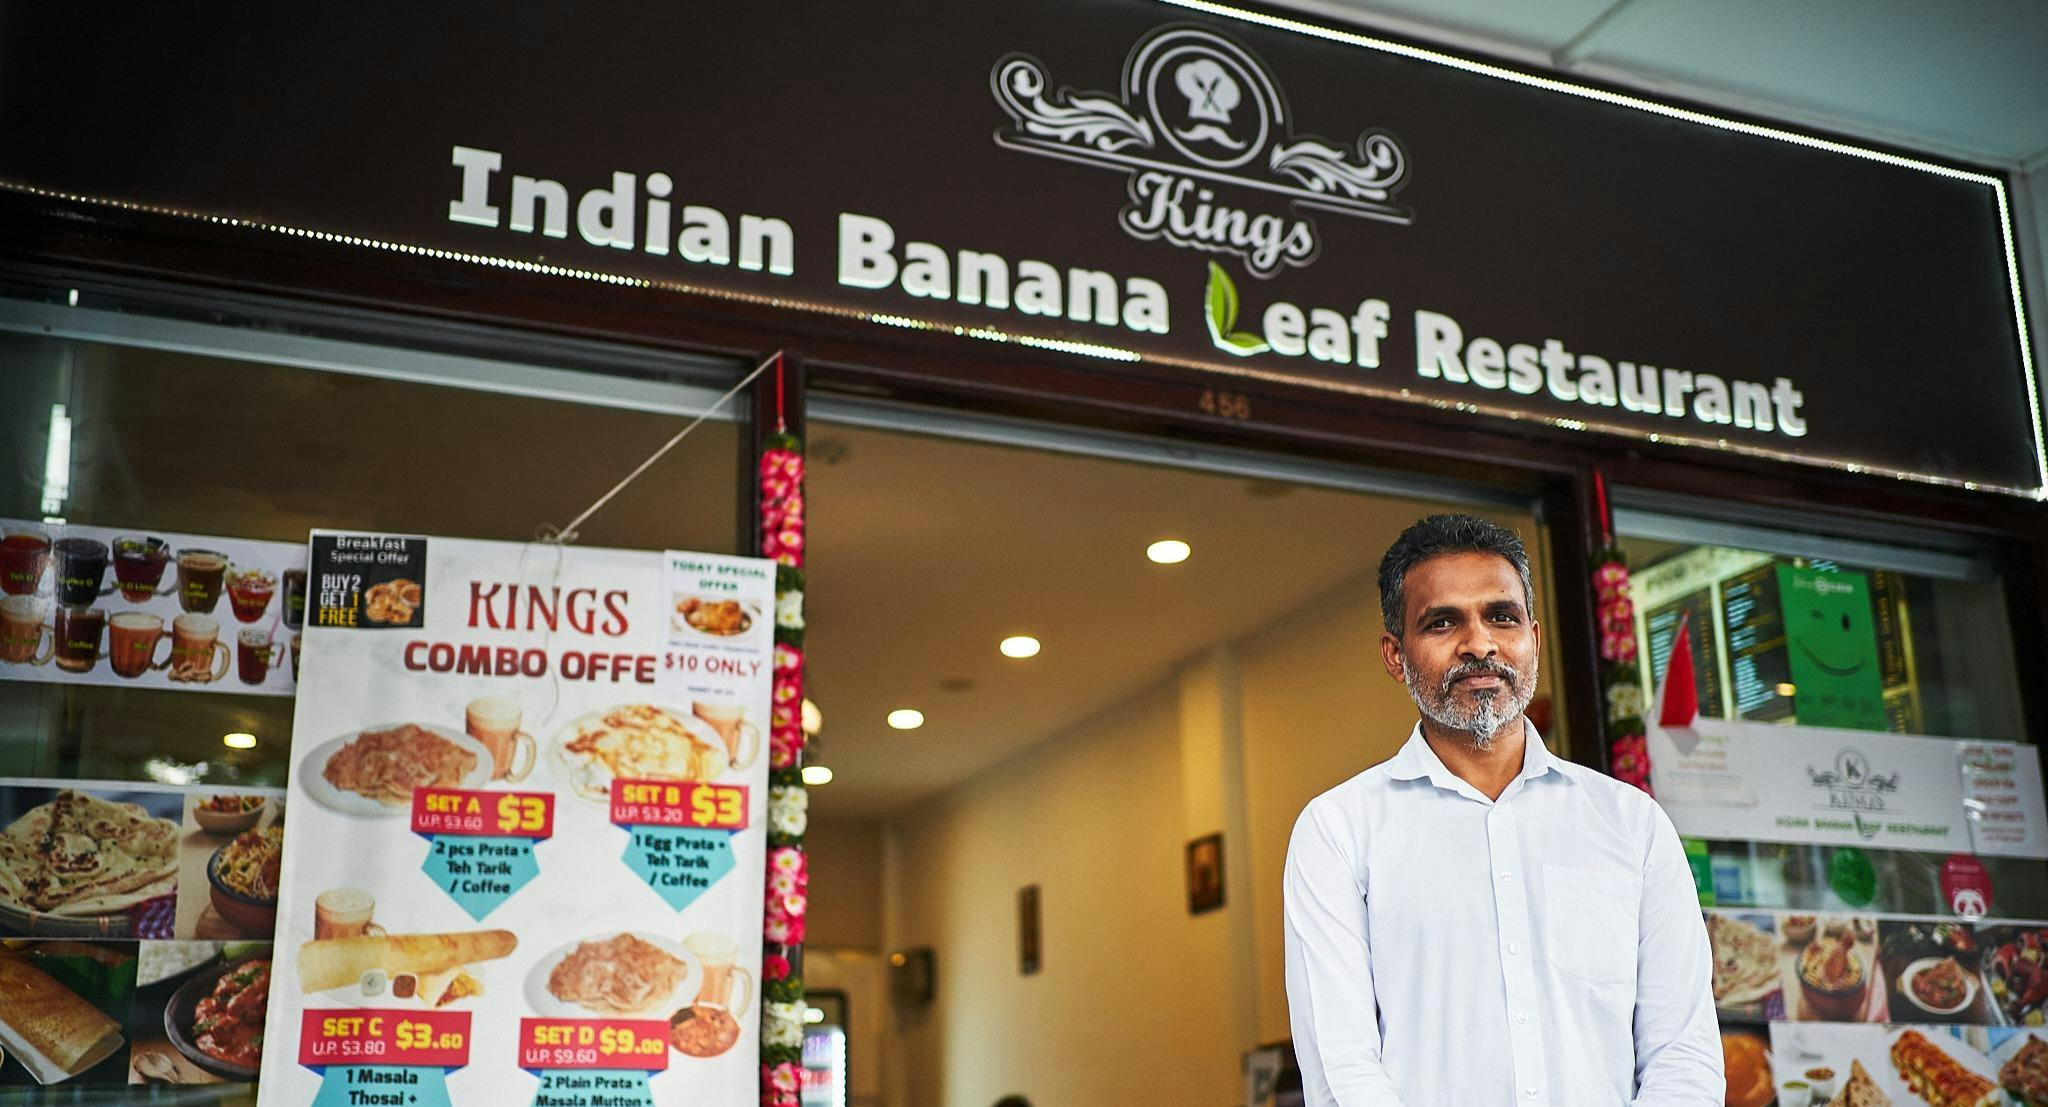 Photo of restaurant King's Indian Banana Leaf Restaurant in Bukit Timah, Singapore